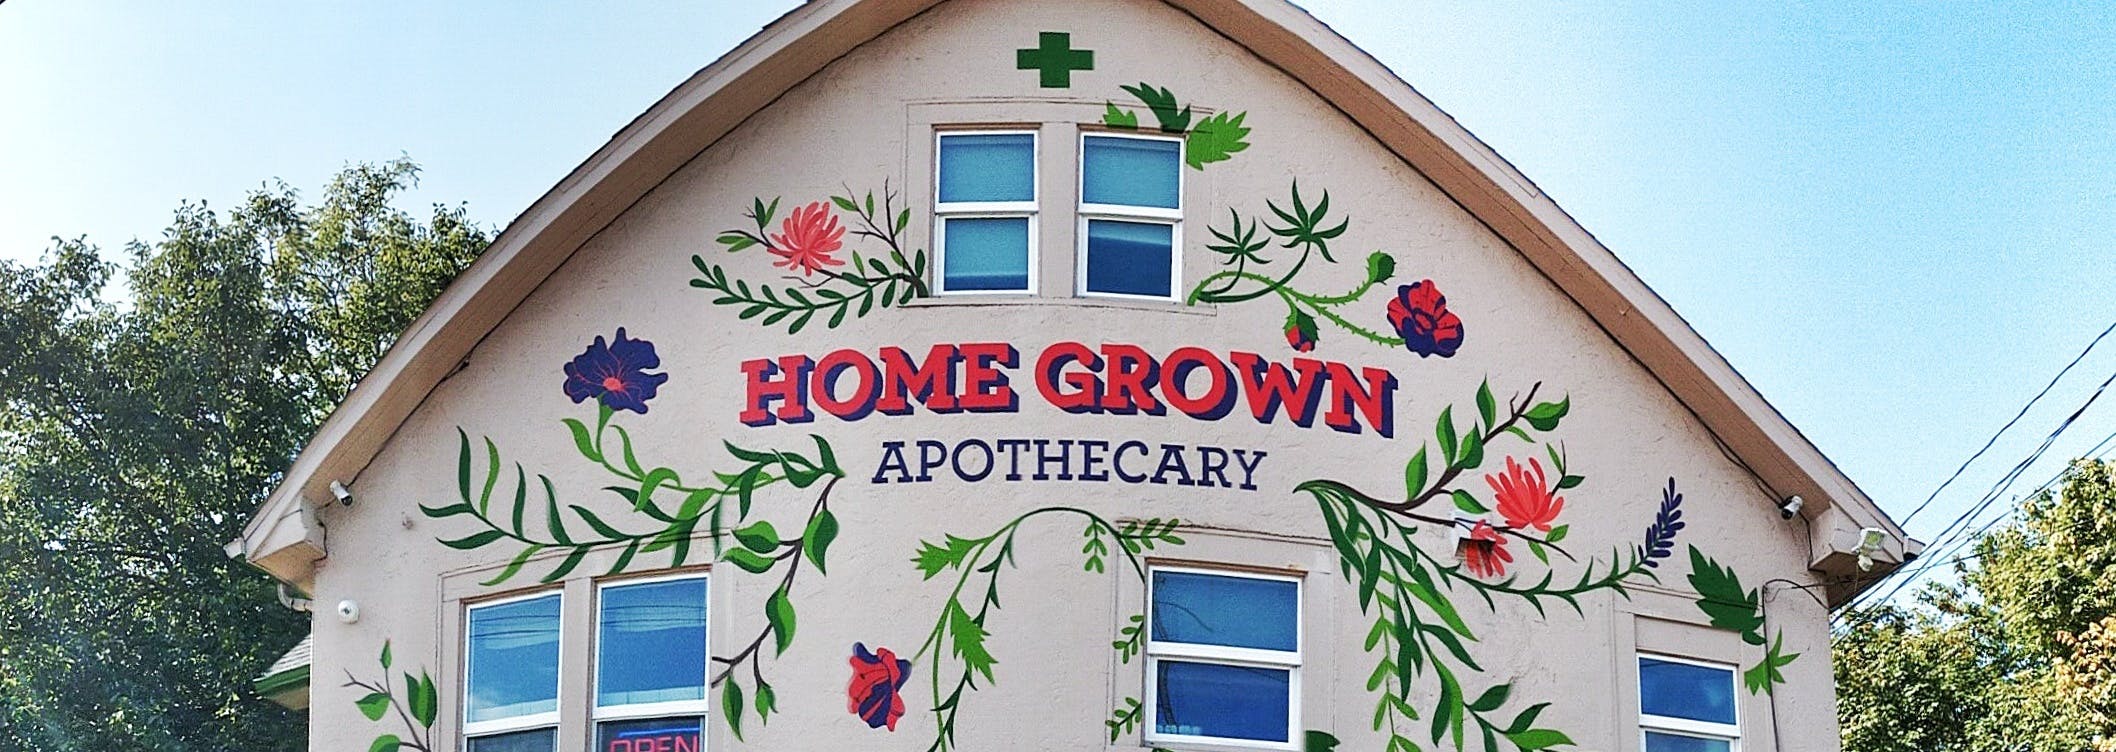 Home Grown Apothecary - Medical Marijuana Doctors - Cannabizme.com